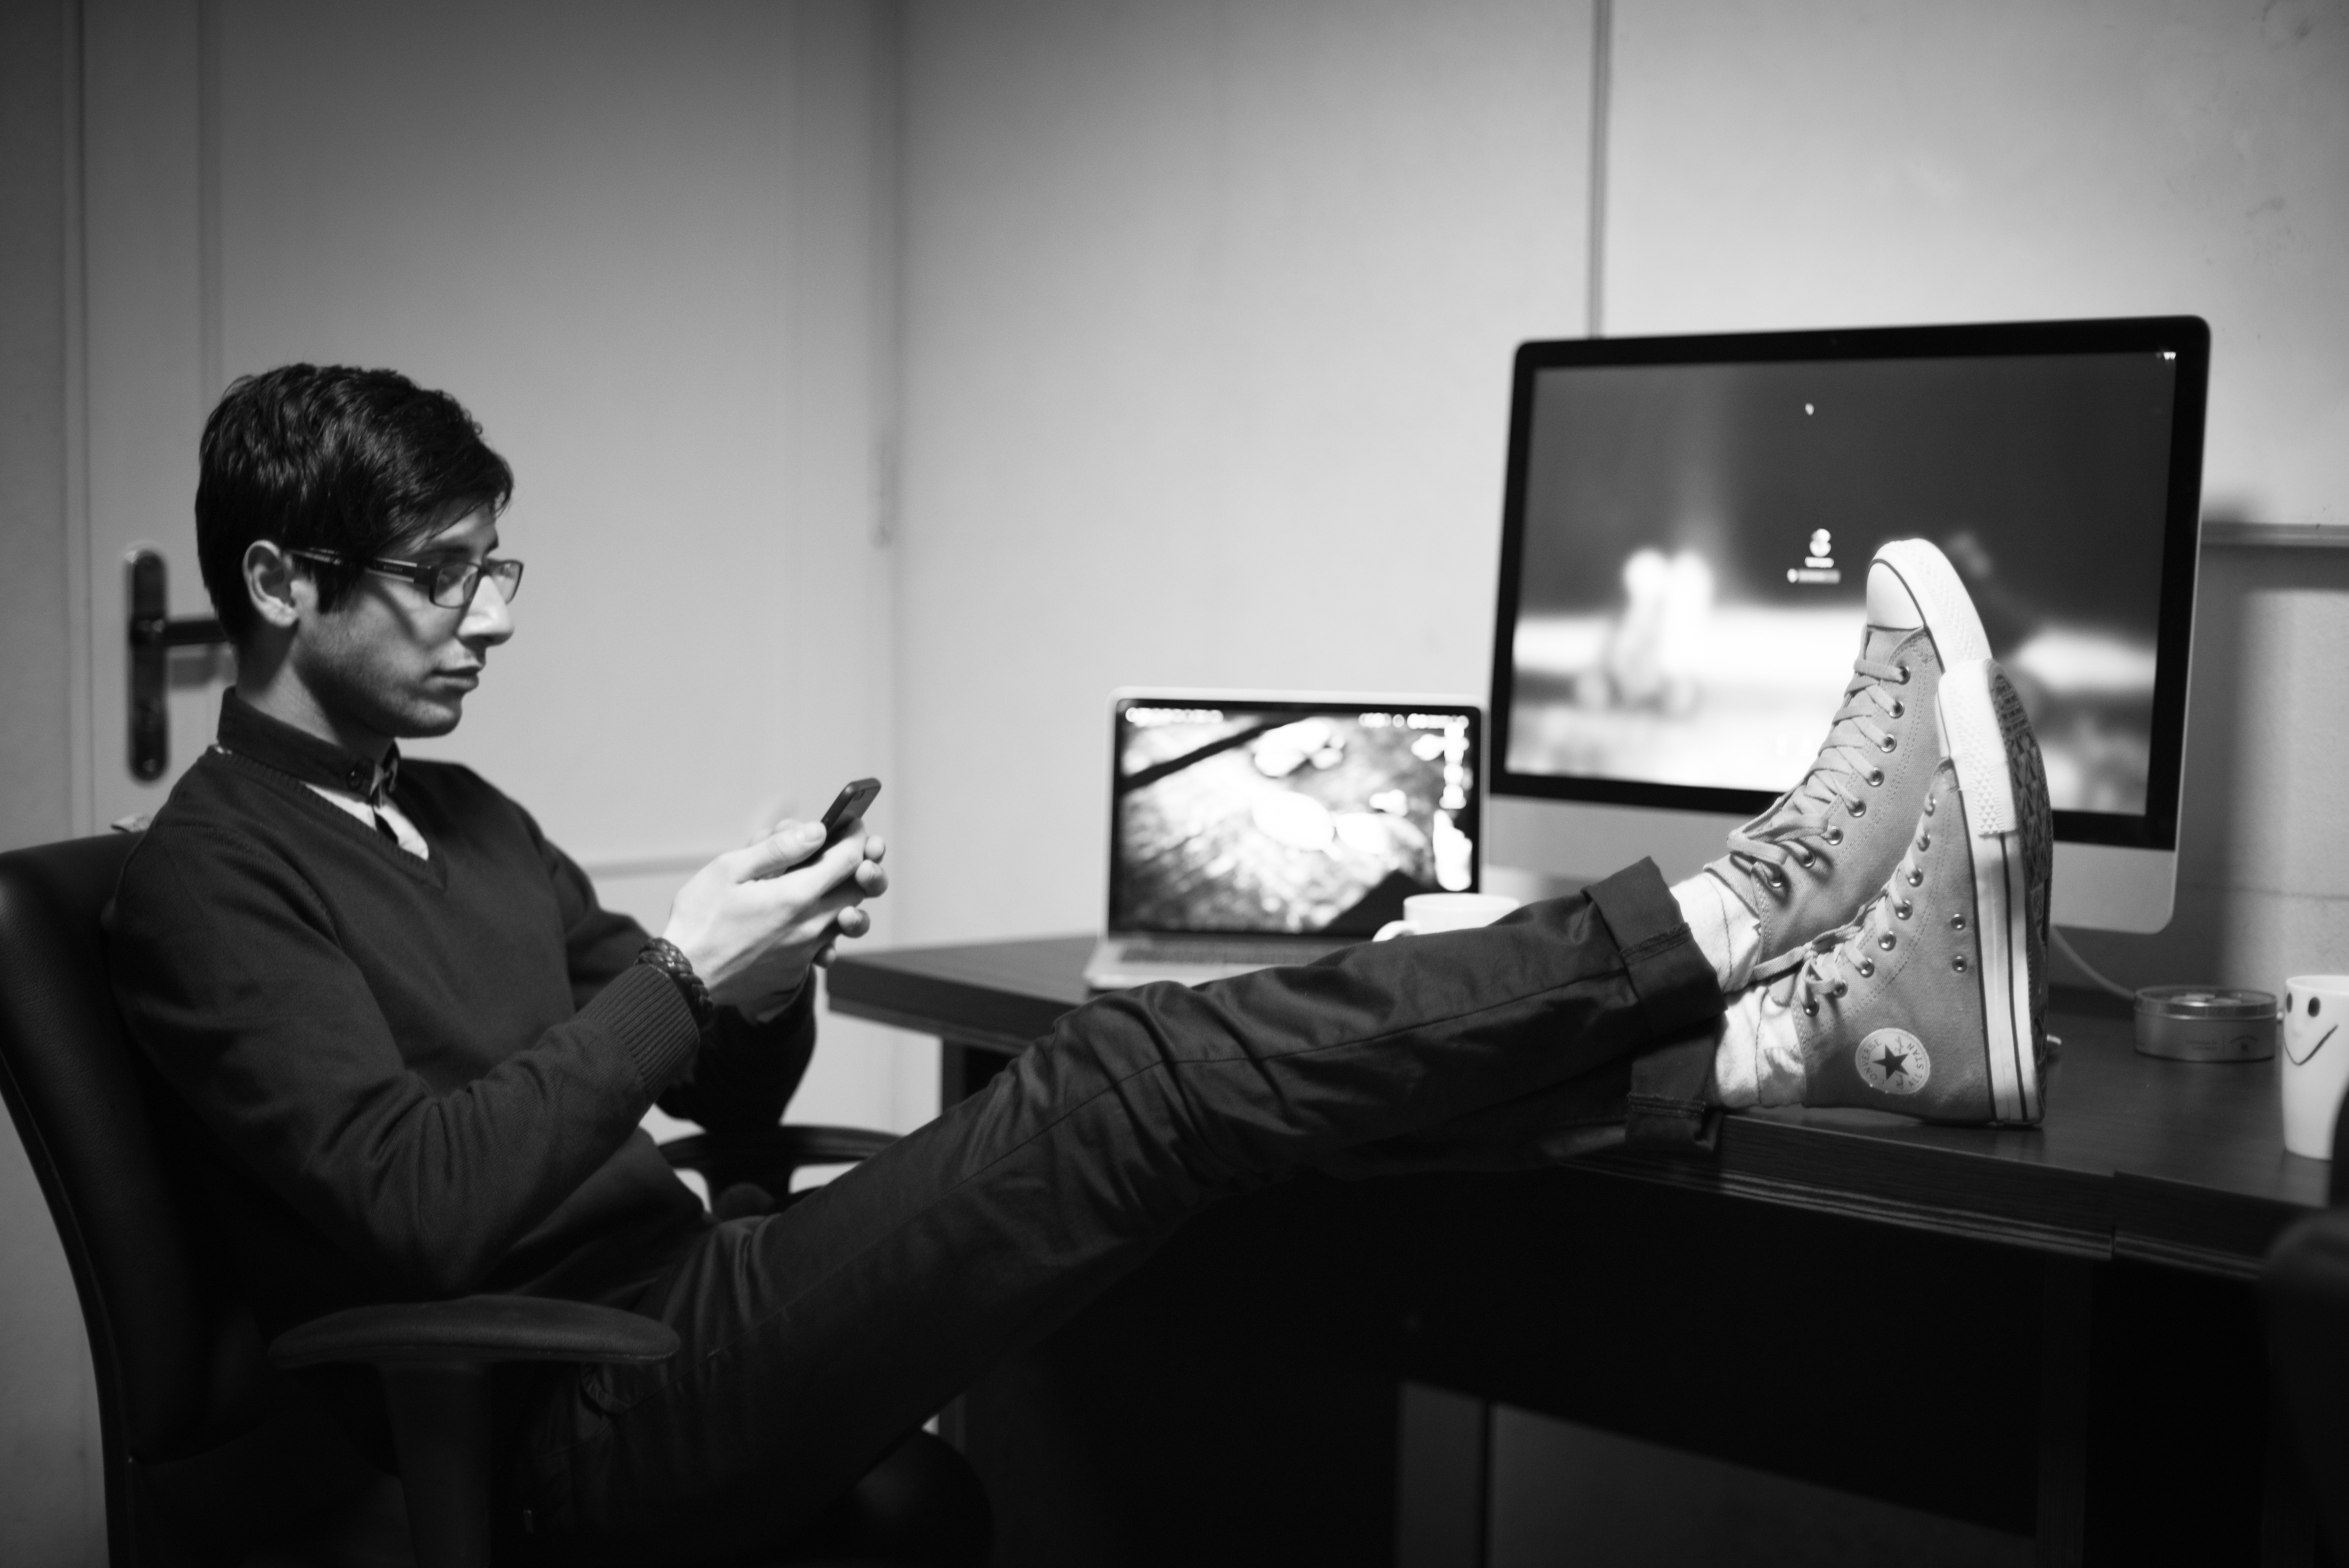 Person's feet on desk, Photo by Kamyar Rad on Unsplash